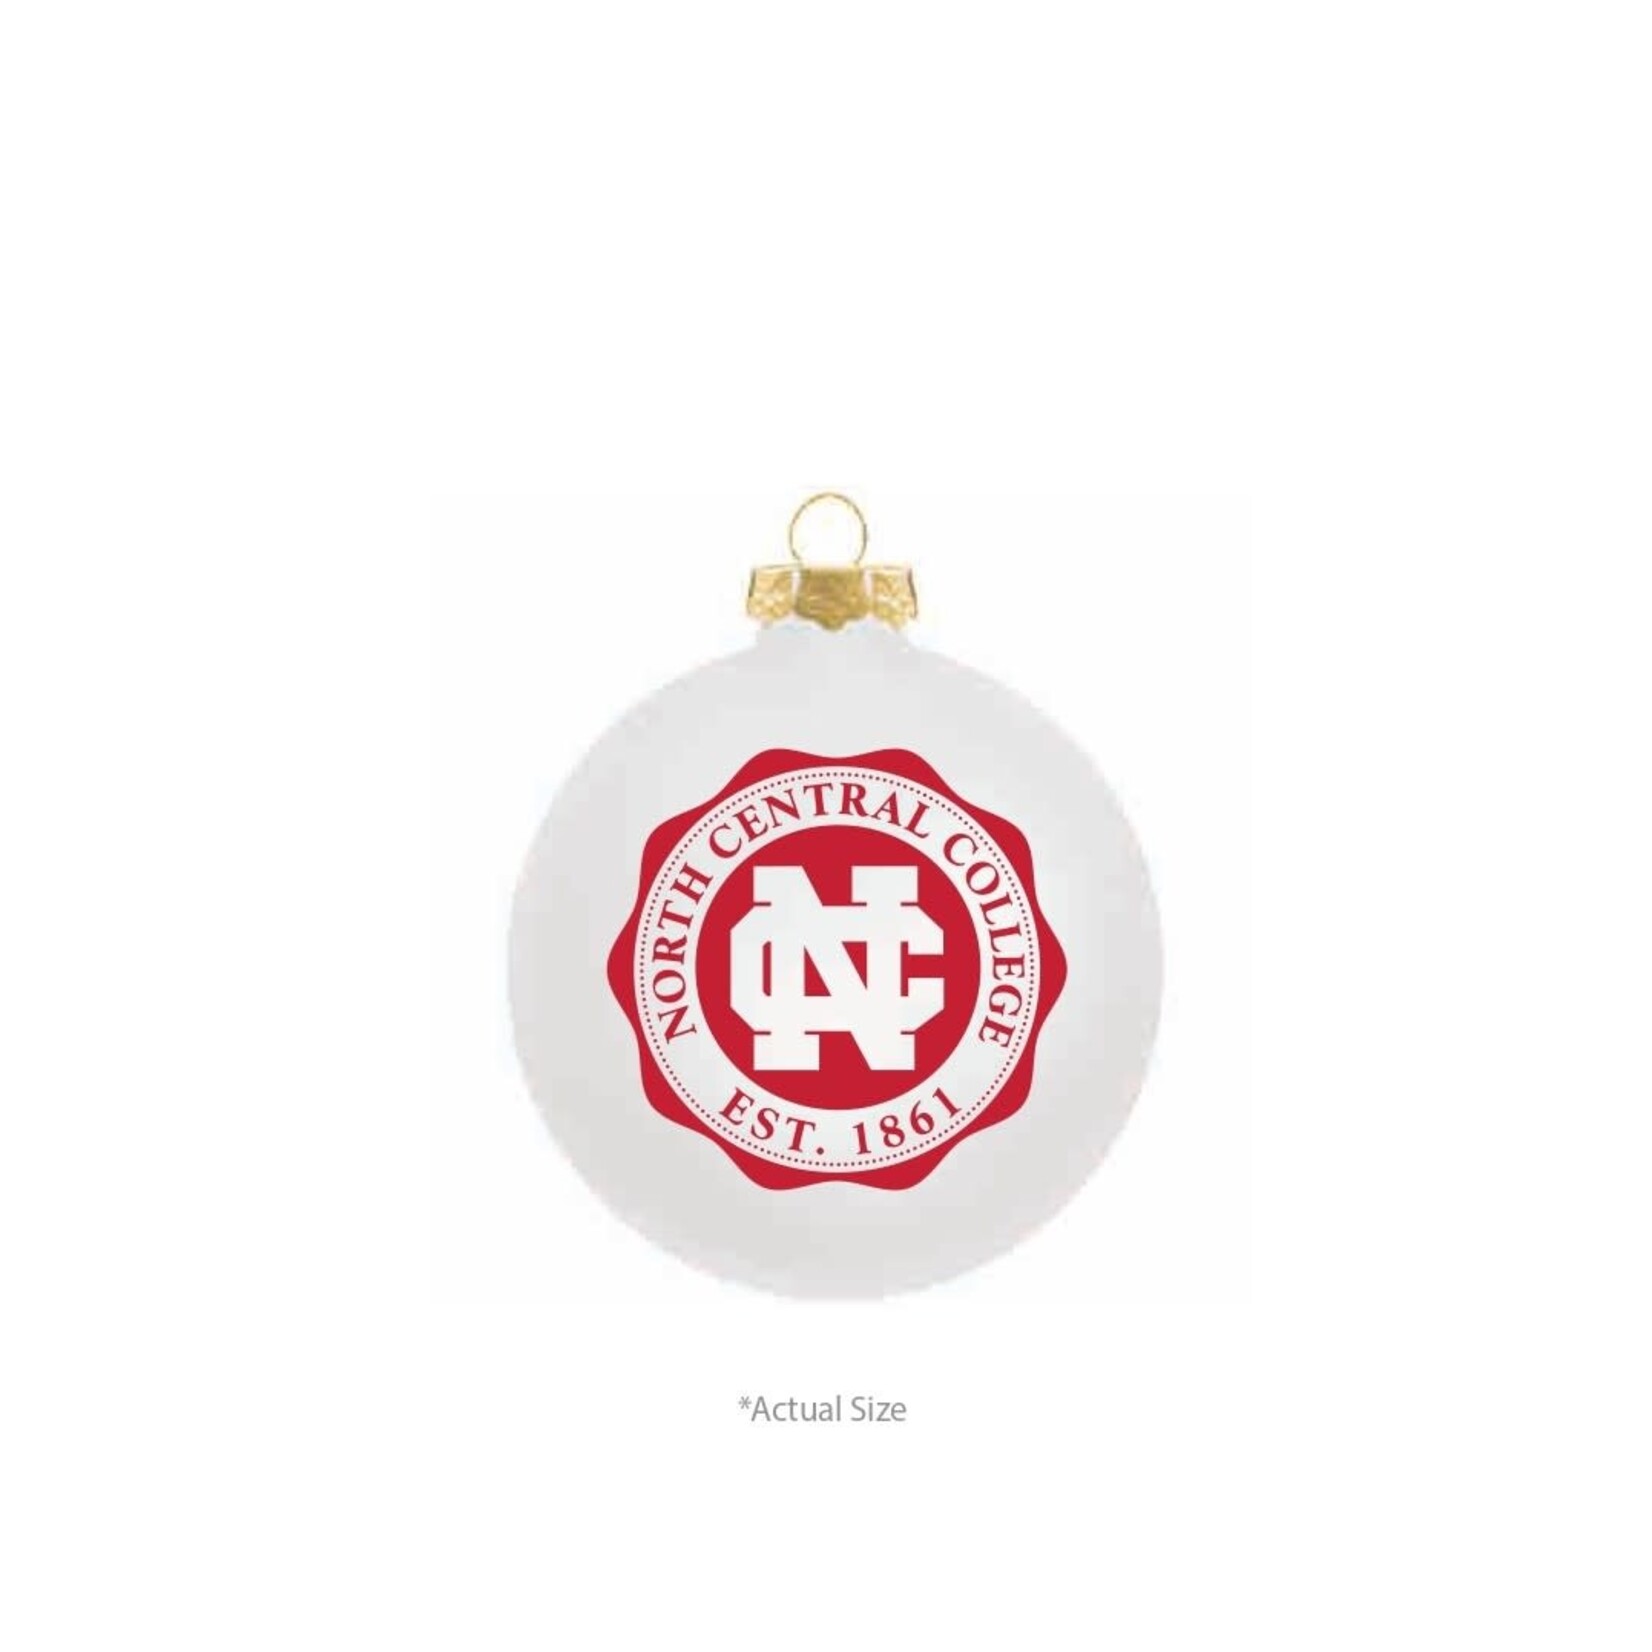 Neil Enterprises Traditional North Central College Ornament (Glass) White